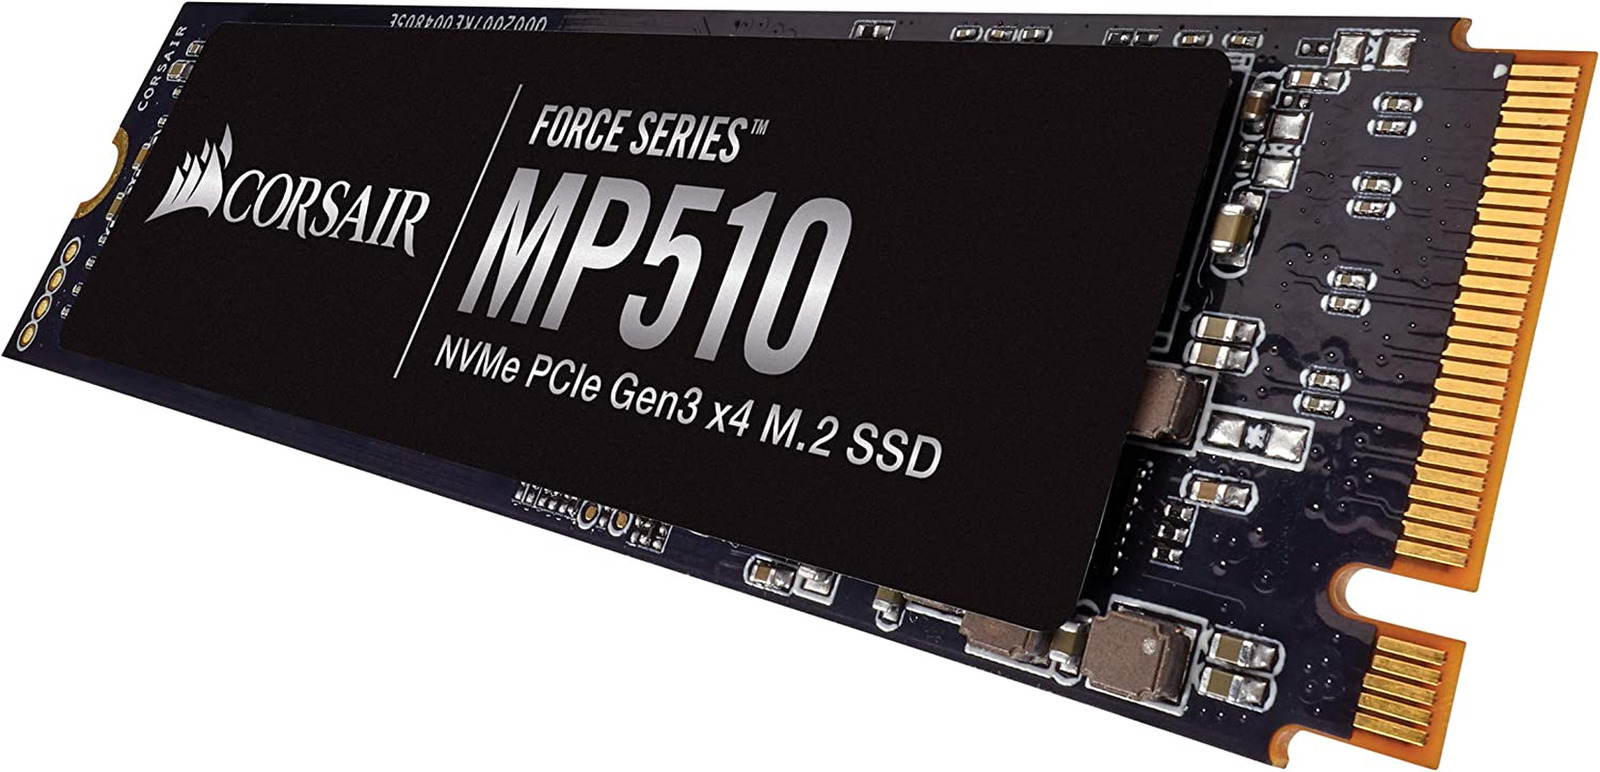 Force Series MP510 960GB Nvme Pcie Gen3 X4 M.2 SSD